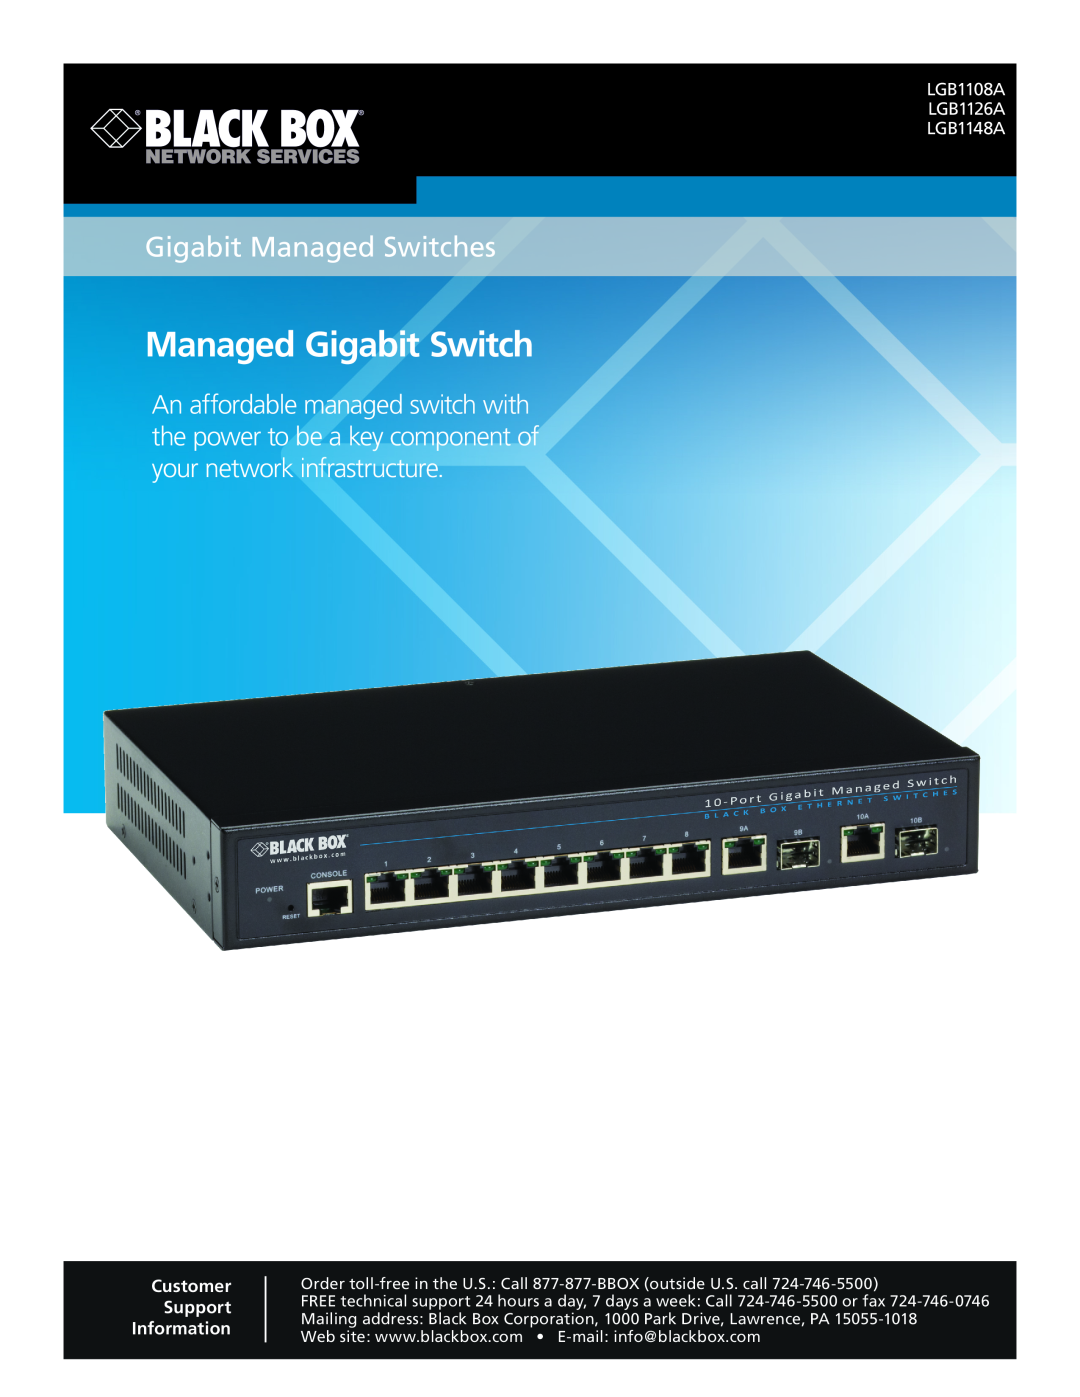 Black Box manual Managed Gigabit Switch, Gigabit Managed Switches, LGB1108A LGB1126A LGB1148A 